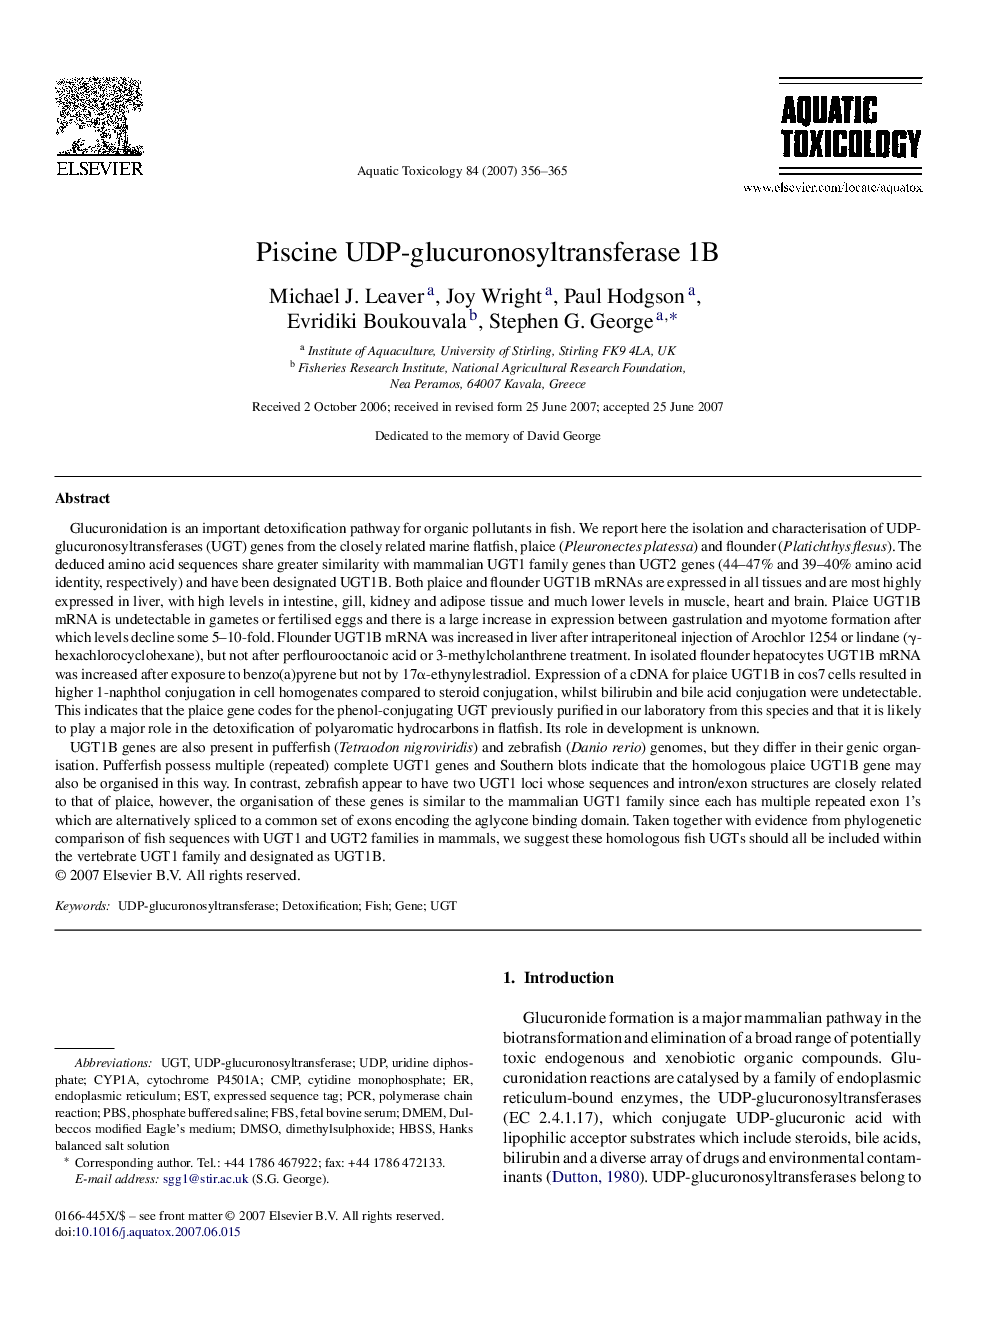 Piscine UDP-glucuronosyltransferase 1B